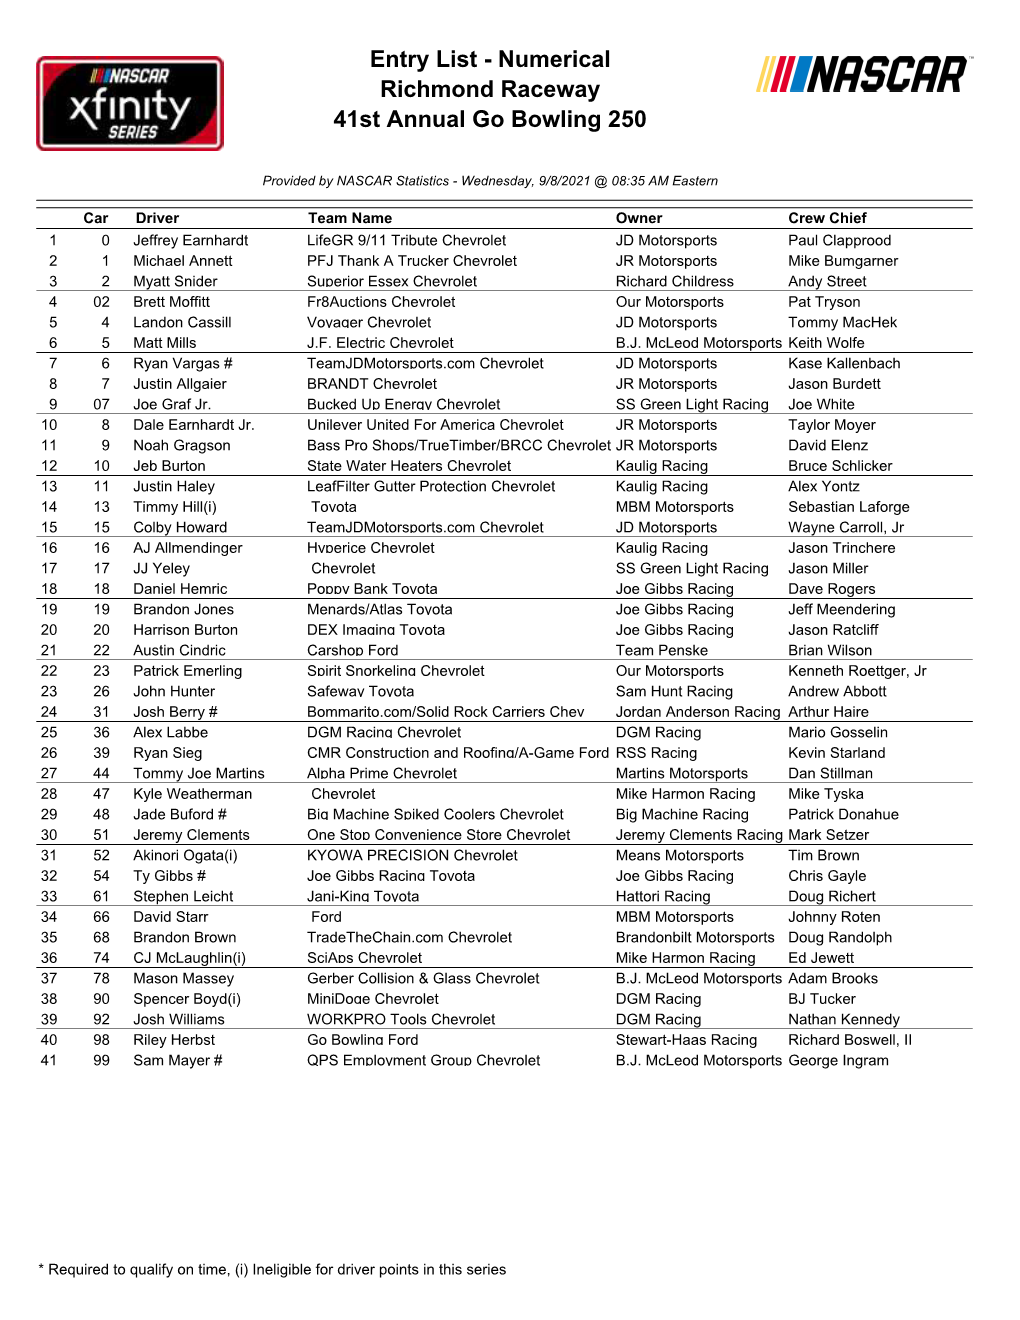 Entry List - Numerical Richmond Raceway 41St Annual Go Bowling 250